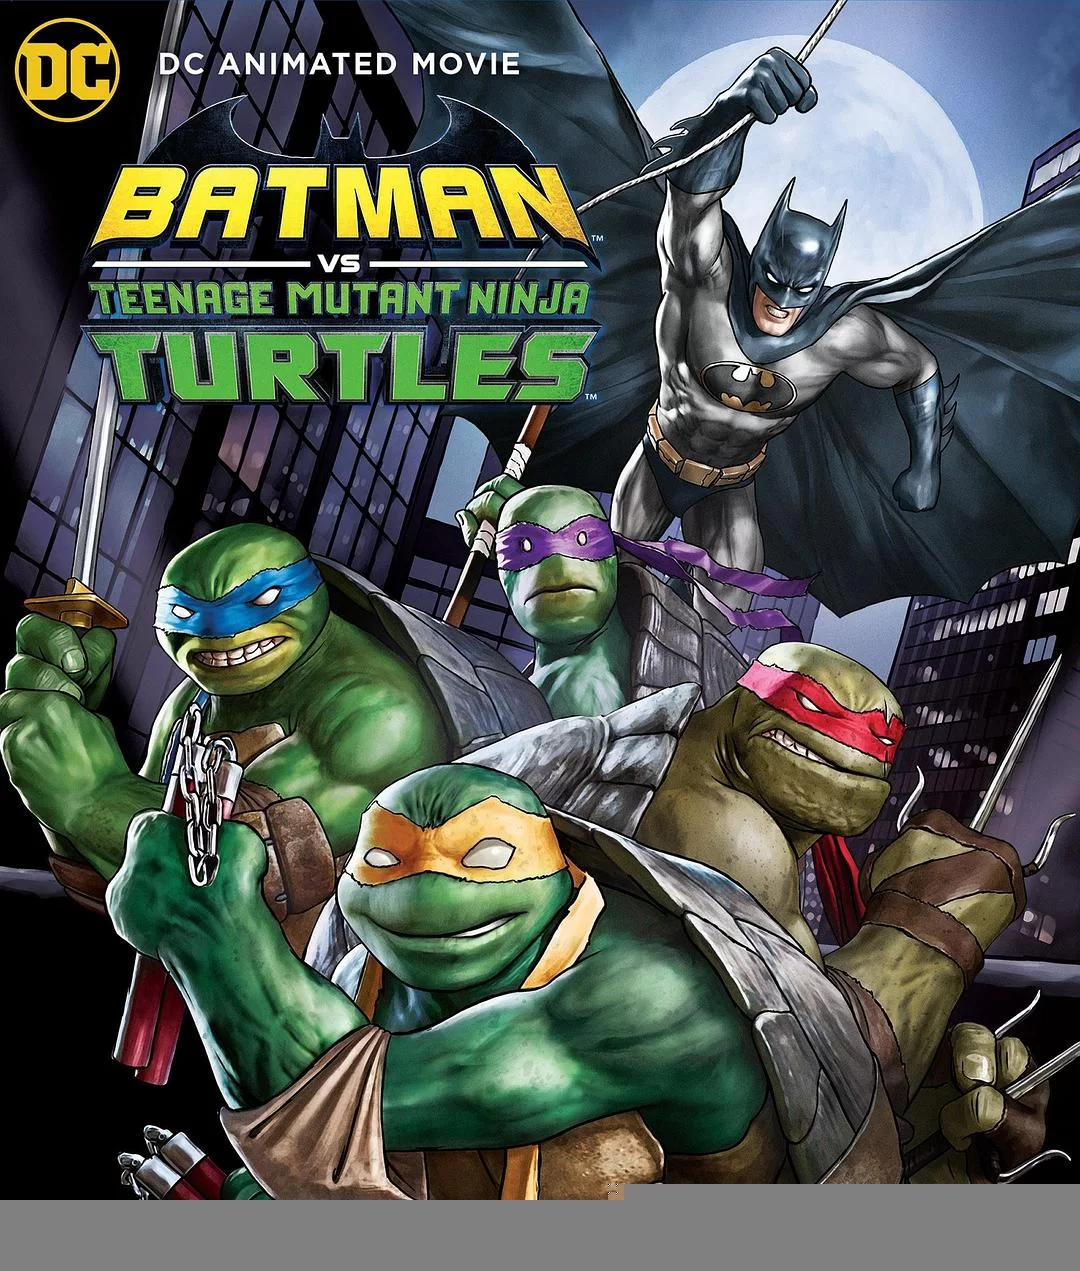 蝙蝠侠大战忍者神龟 蓝光原盘下载+高清MKV版 2019 Batman Vs. Teenage Mutant Ninja Turtles 21.4G